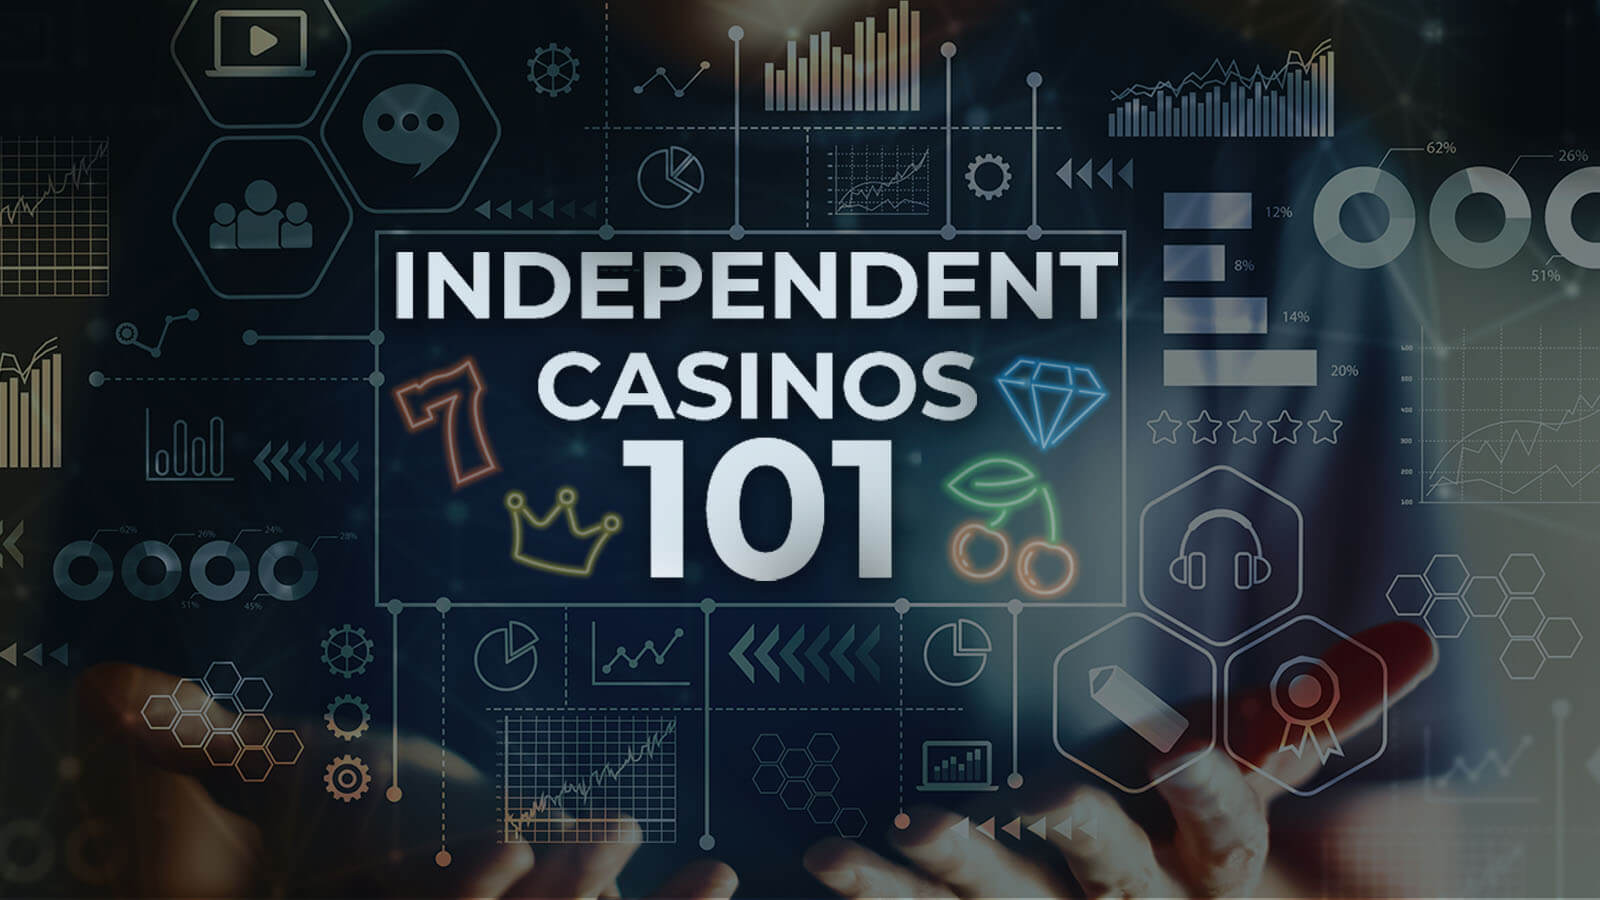 Independent Online Casinos 101